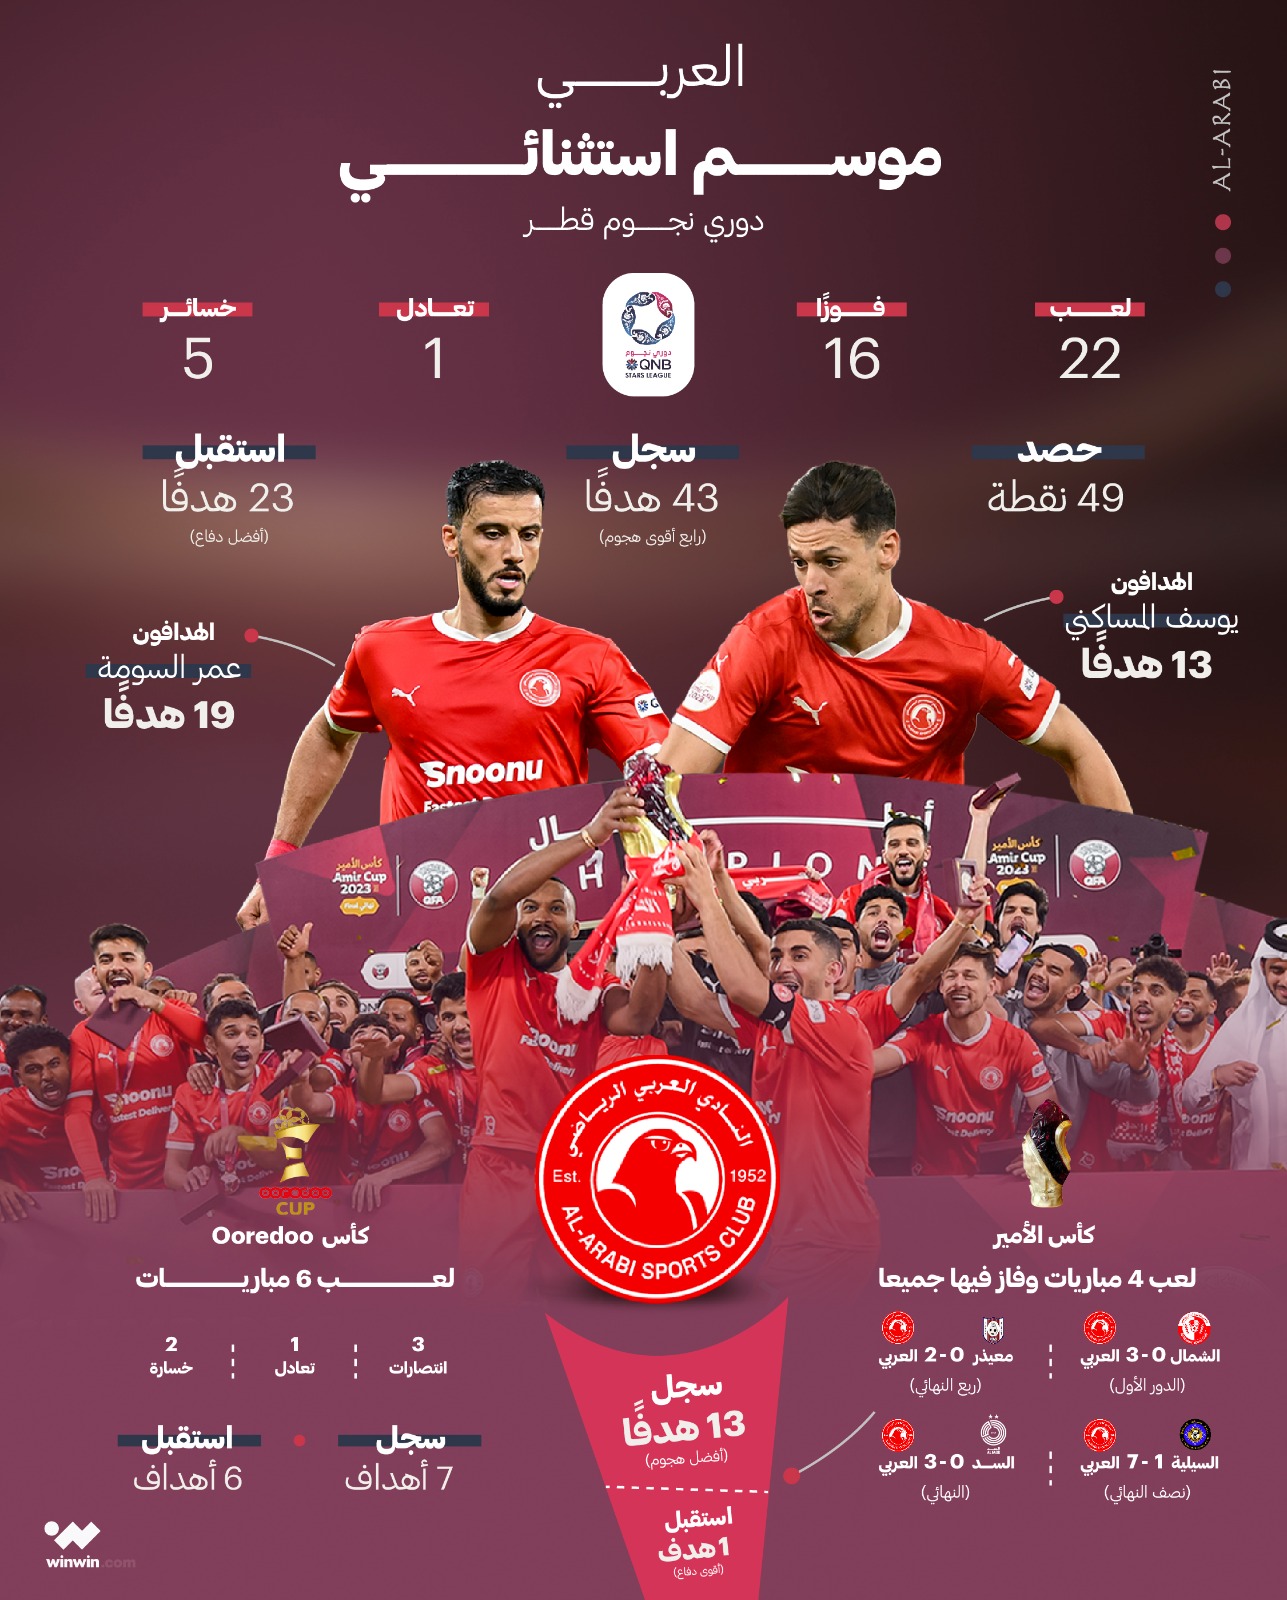 موسم استثنائي للعربي في دوري نجوم قطر (winwin) ون ون winwin